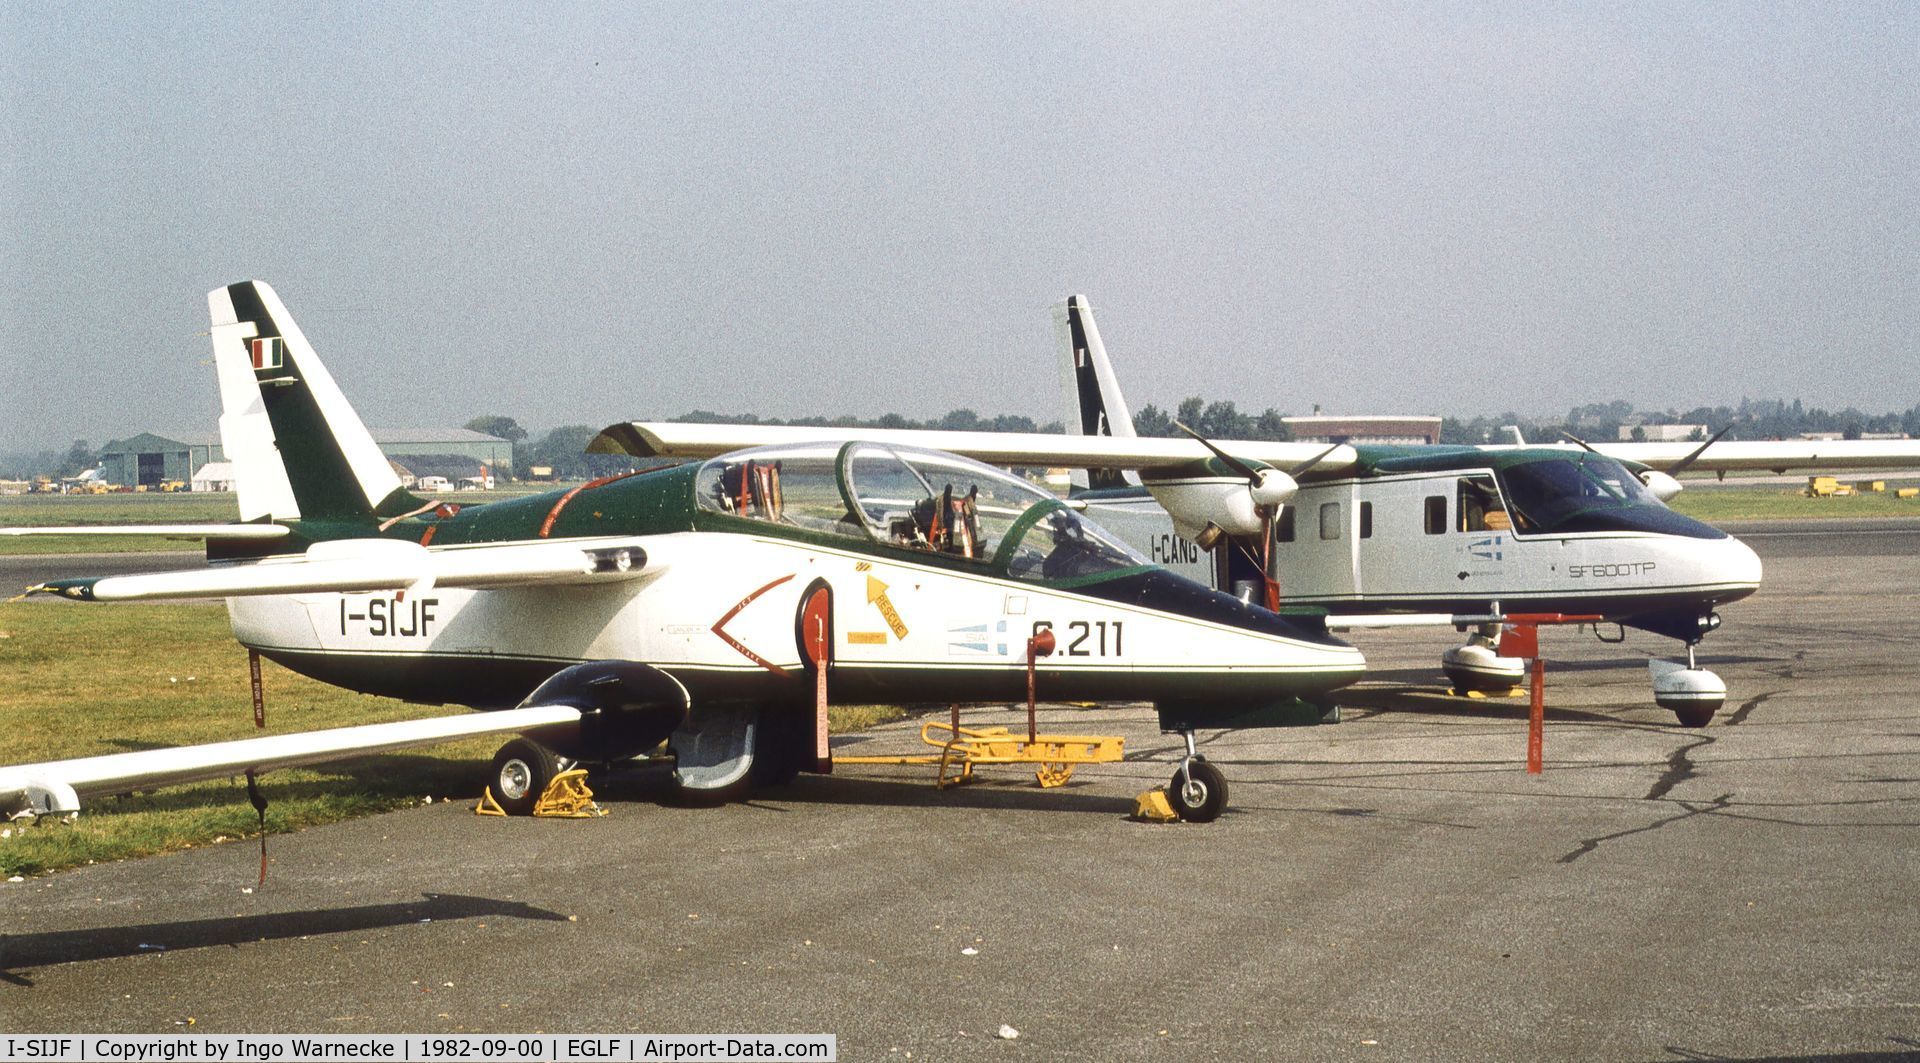 I-SIJF, 1981 SIAI-Marchetti S-211 C/N 01/002, SIAI-Marchetti S.211 at Farnborough International 1982